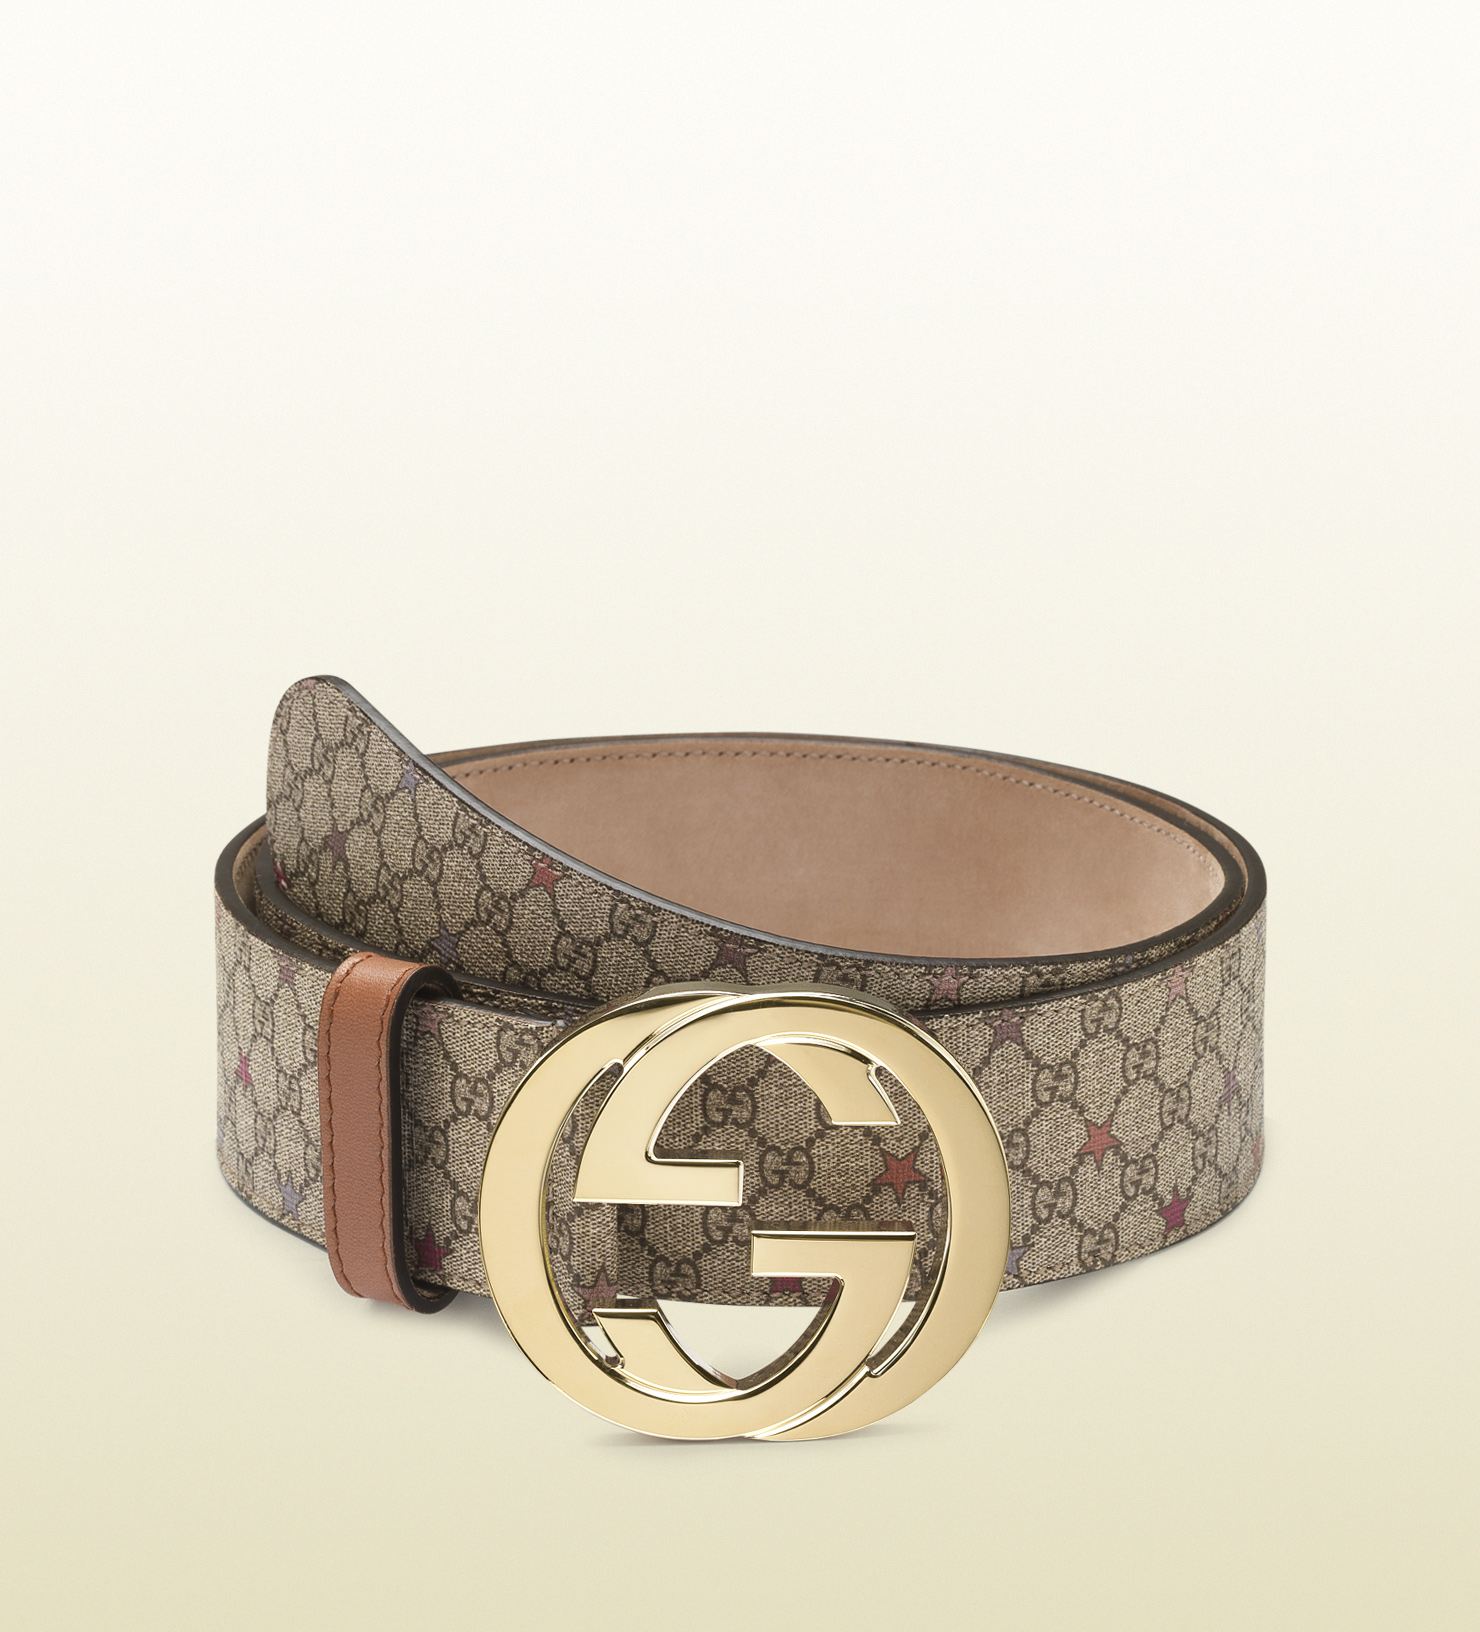 Lyst - Gucci Supreme Canvas Belt with Interlocking G Buckle in Brown